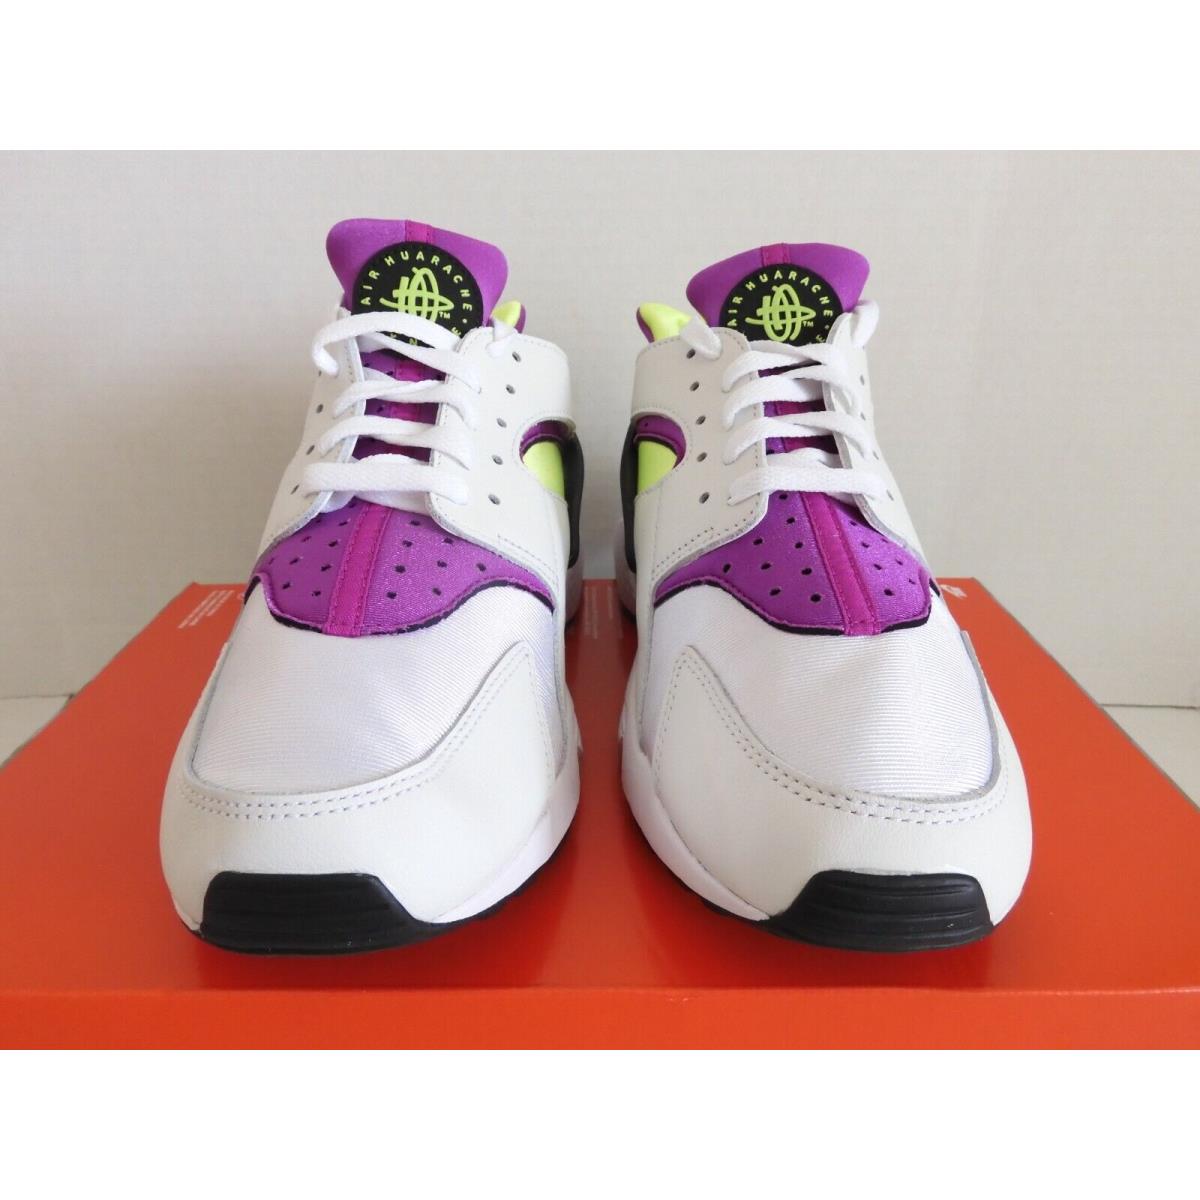 Nike shoes Air Huarache - White 1